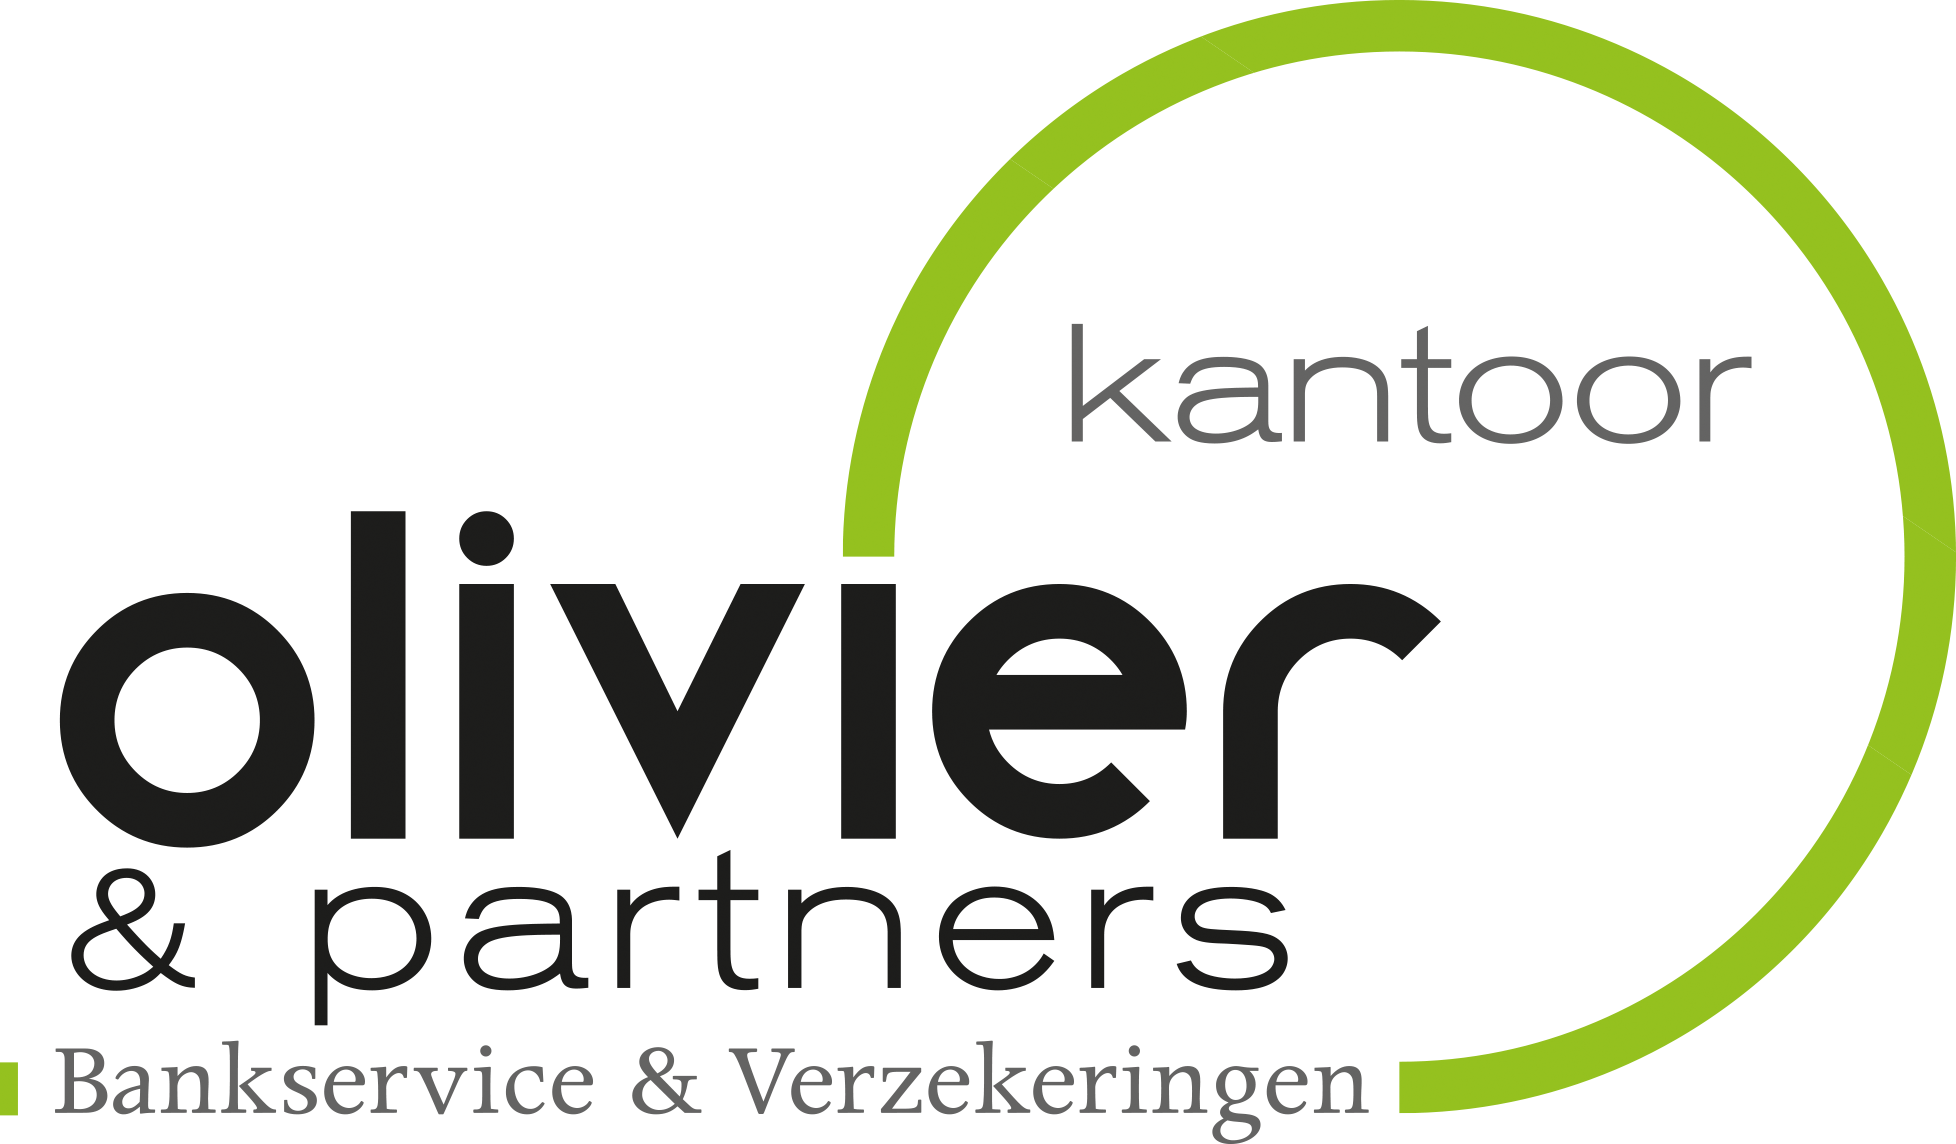 Olivier & partners Logo